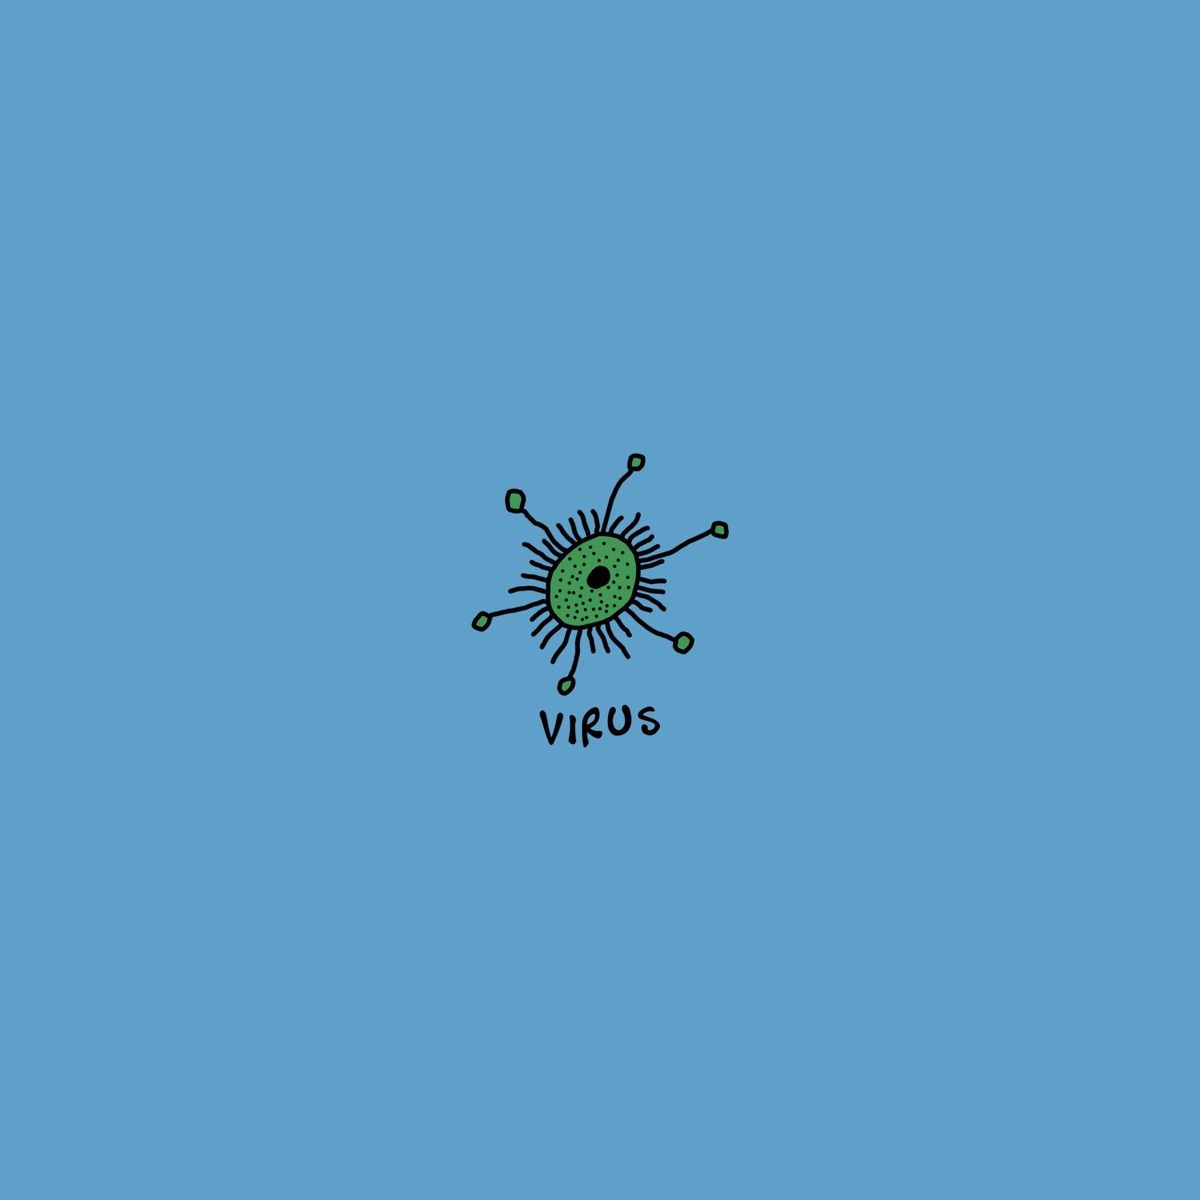  Virus Hintergrundbild 1200x1200. Virus by David Moreno & Caesar on Apple Music